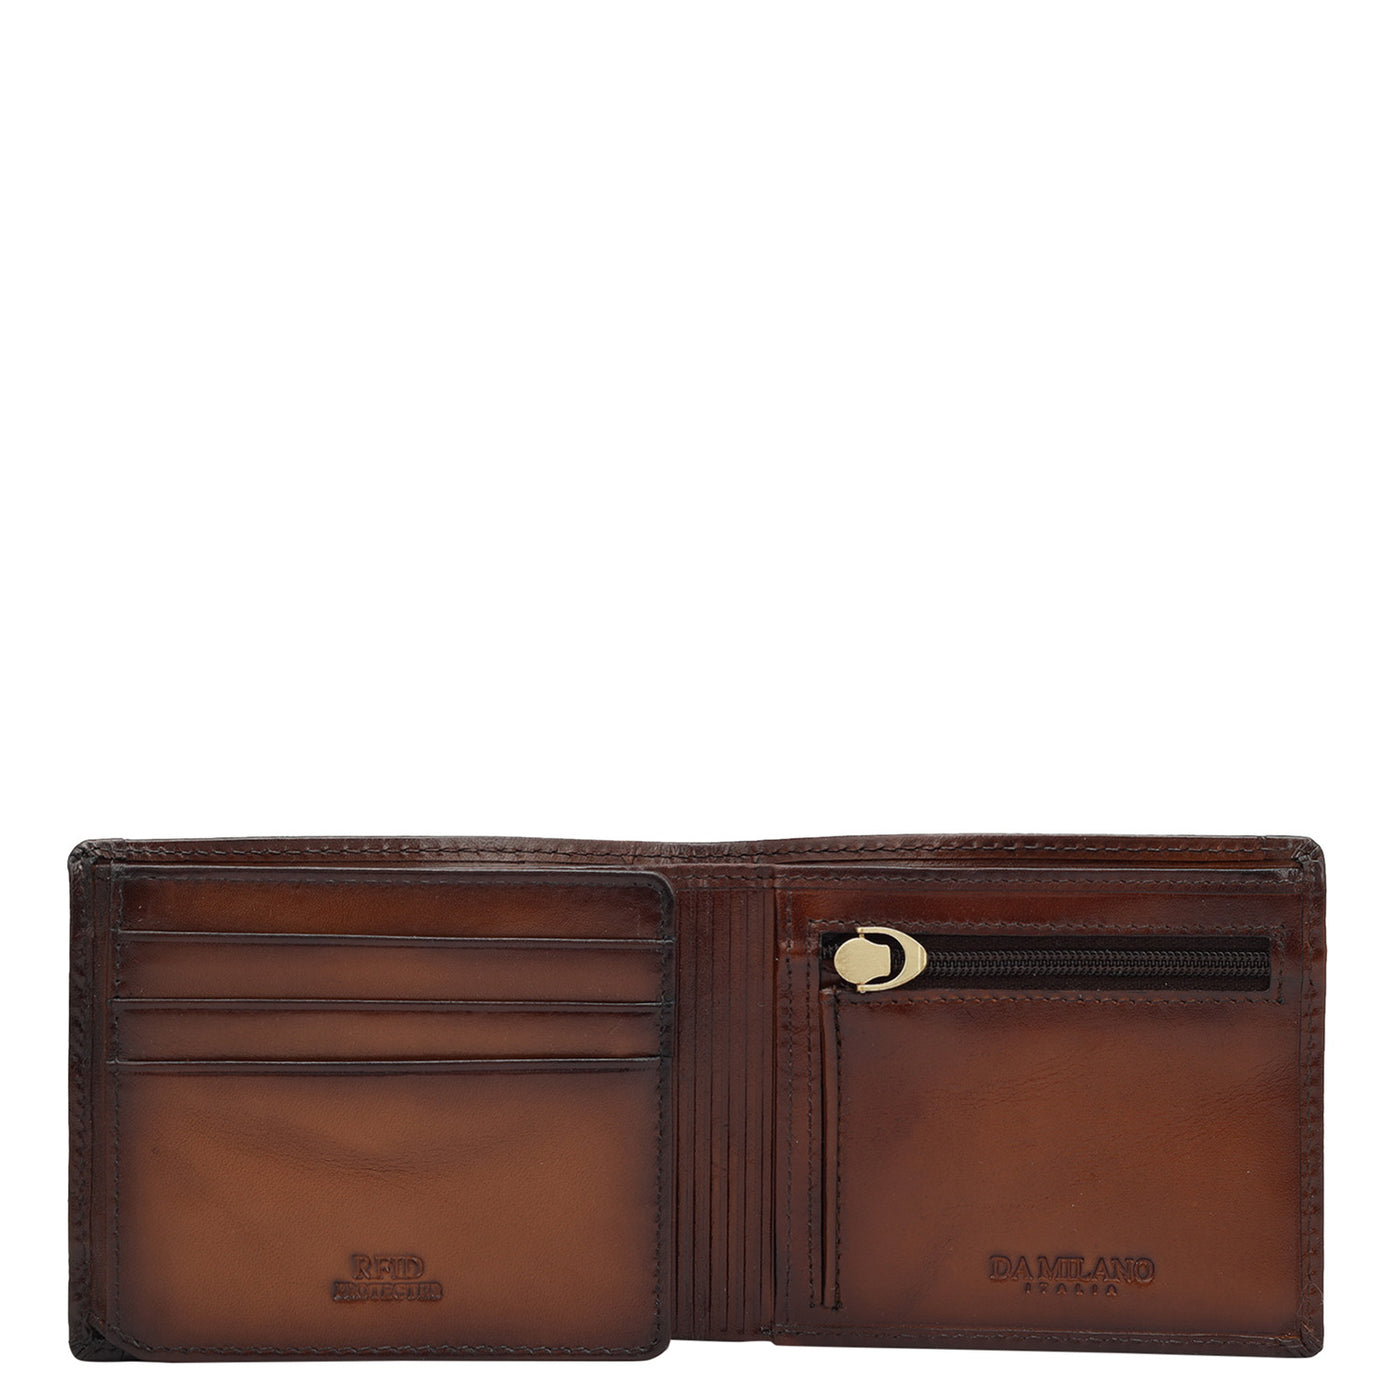 Mat Emboss Leather Mens Wallet - Cognac